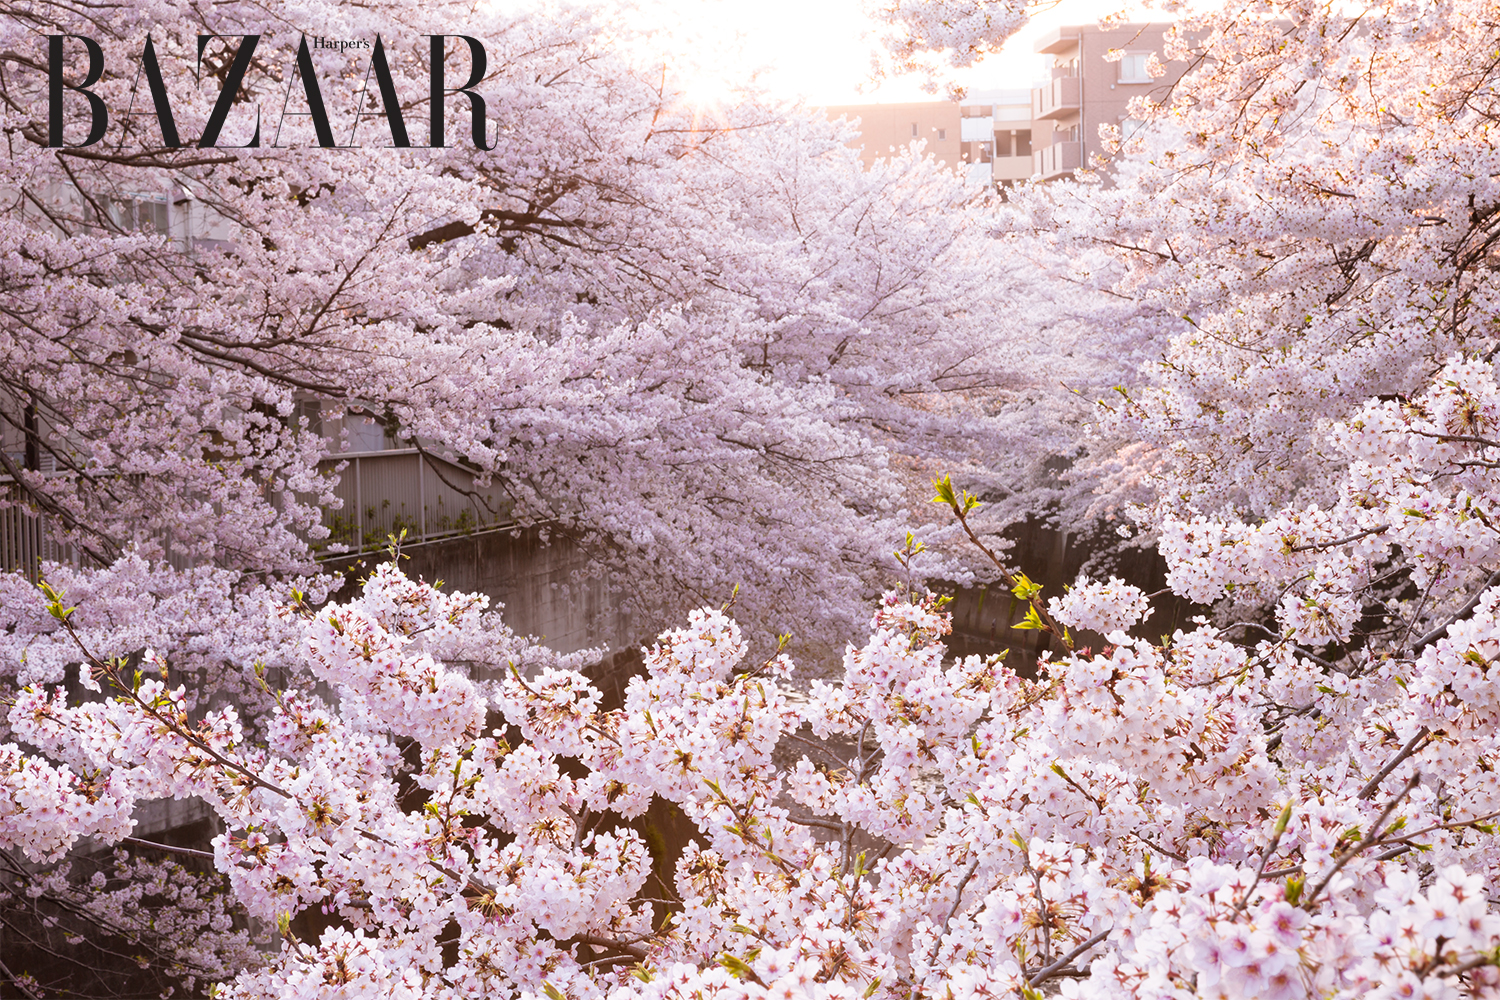 Harper's Bazaar_Ngắm hoa anh đào tại Mandarin Oriental Tokyo_05